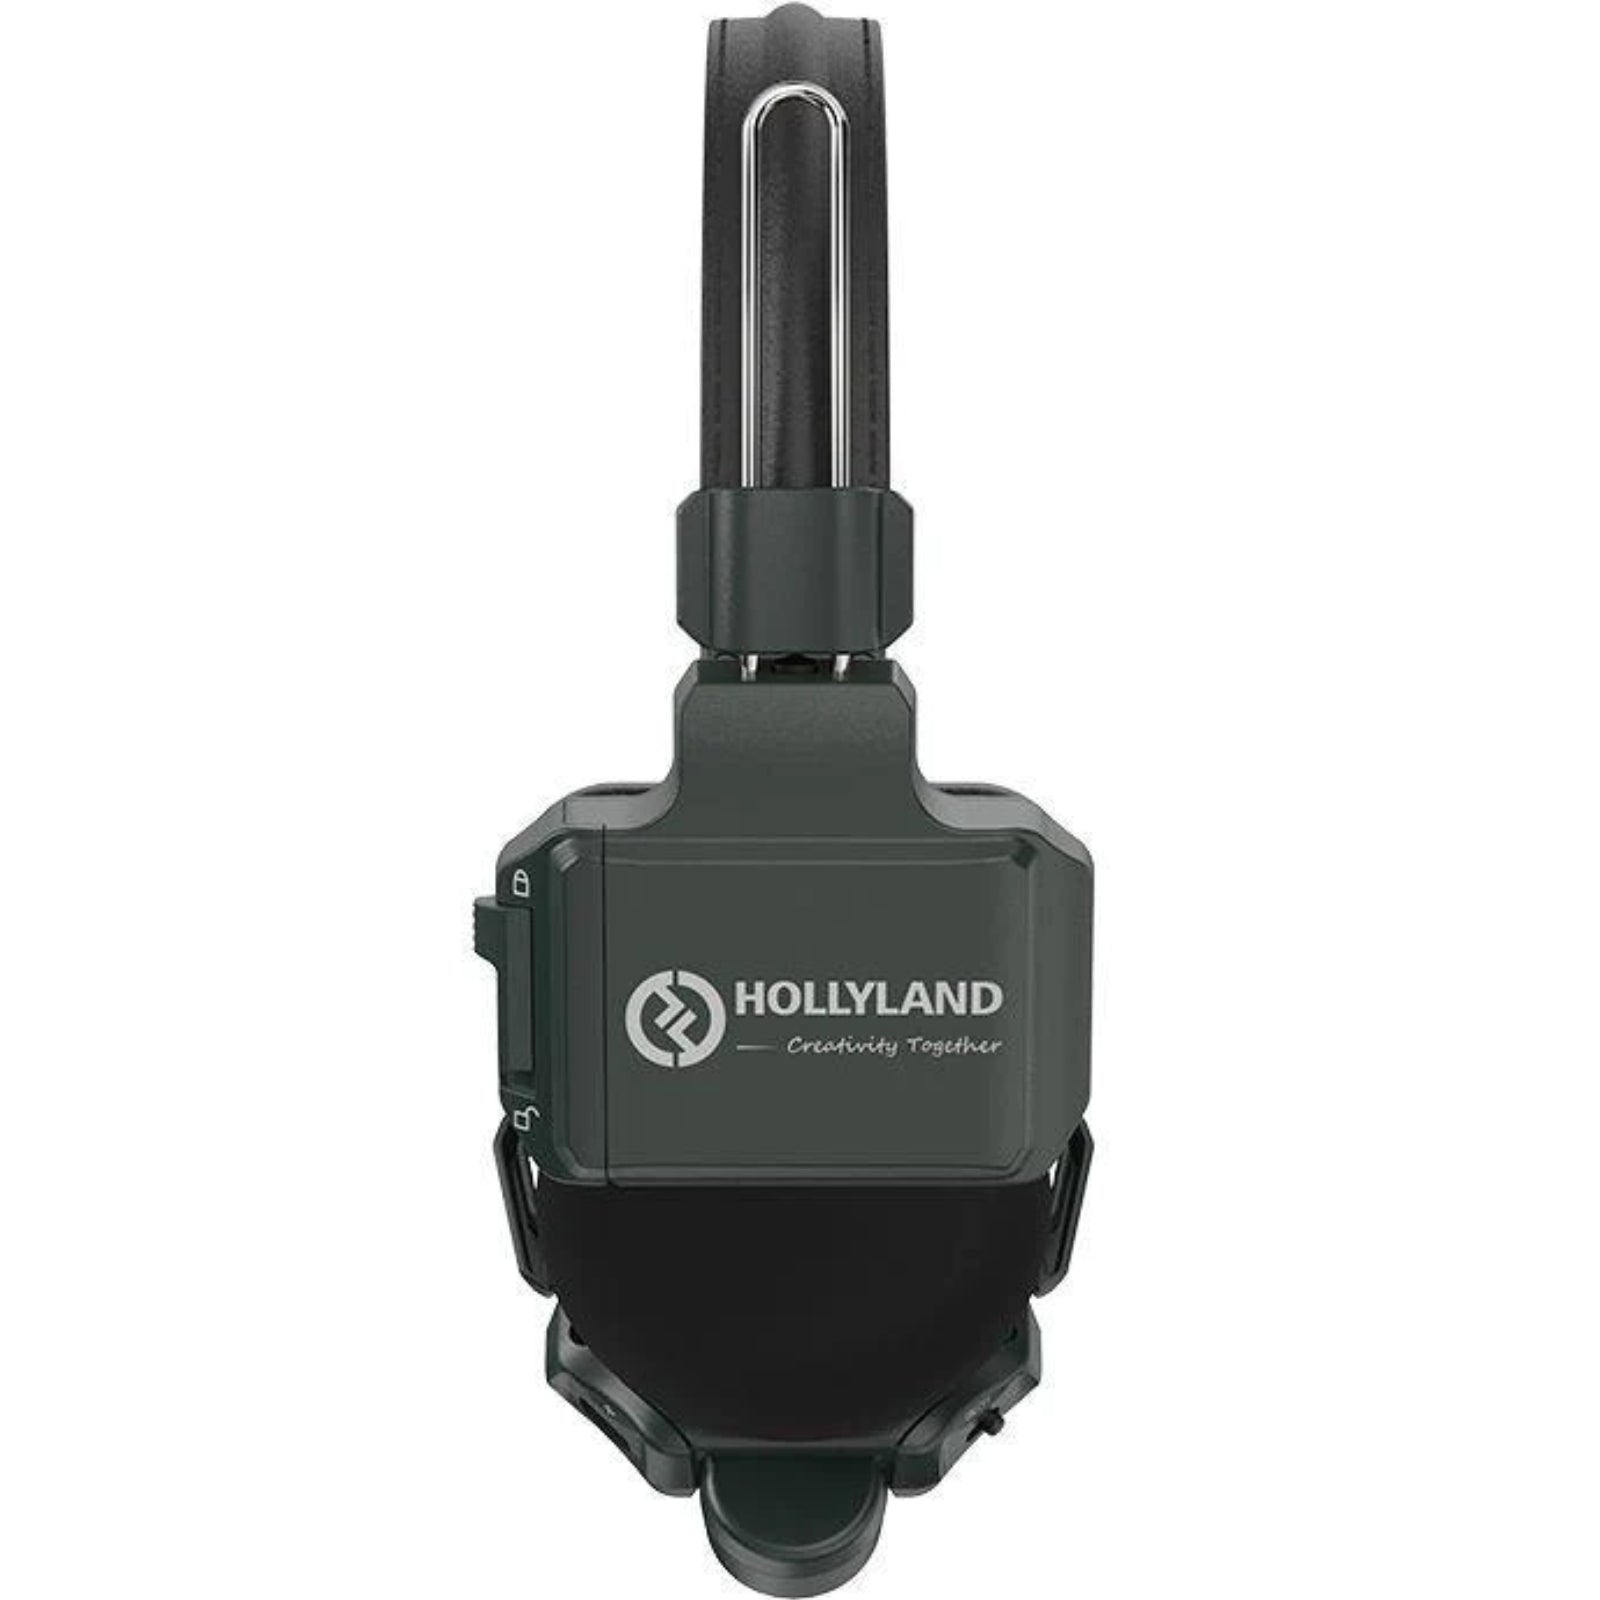 Hollyland Solidcom C1-4S - MyMobile